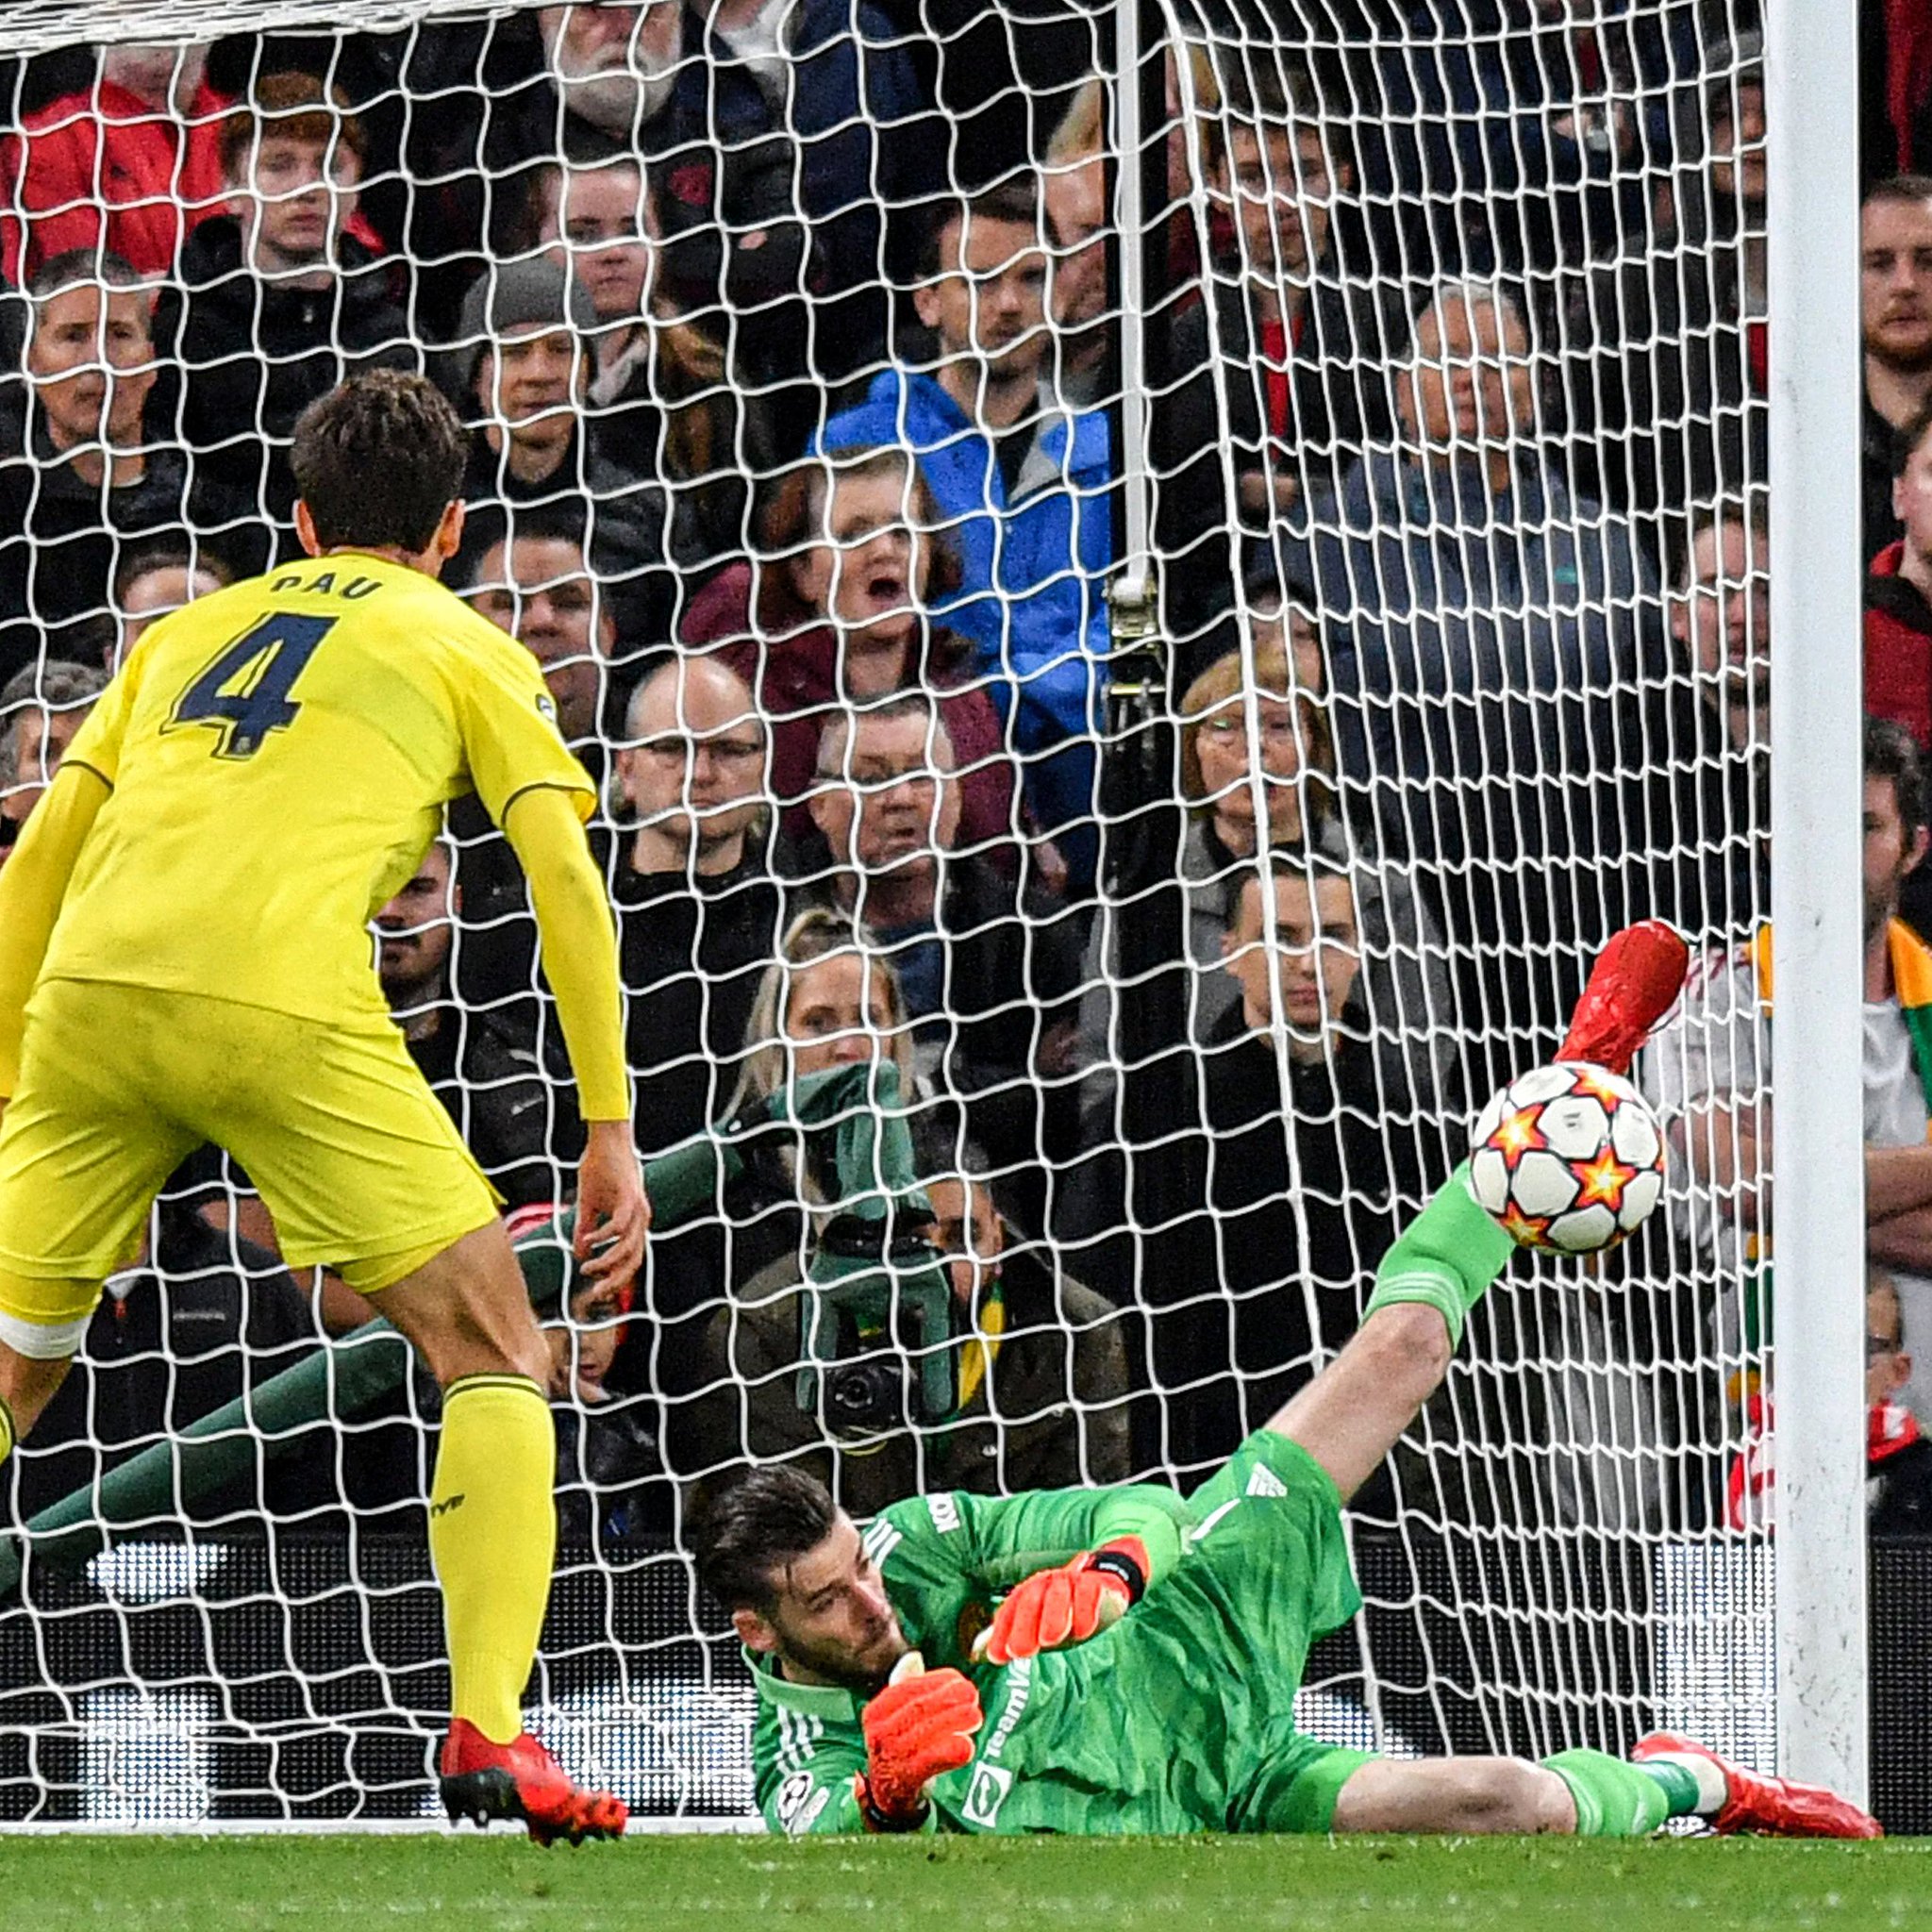 De Gea saves Man United's goal